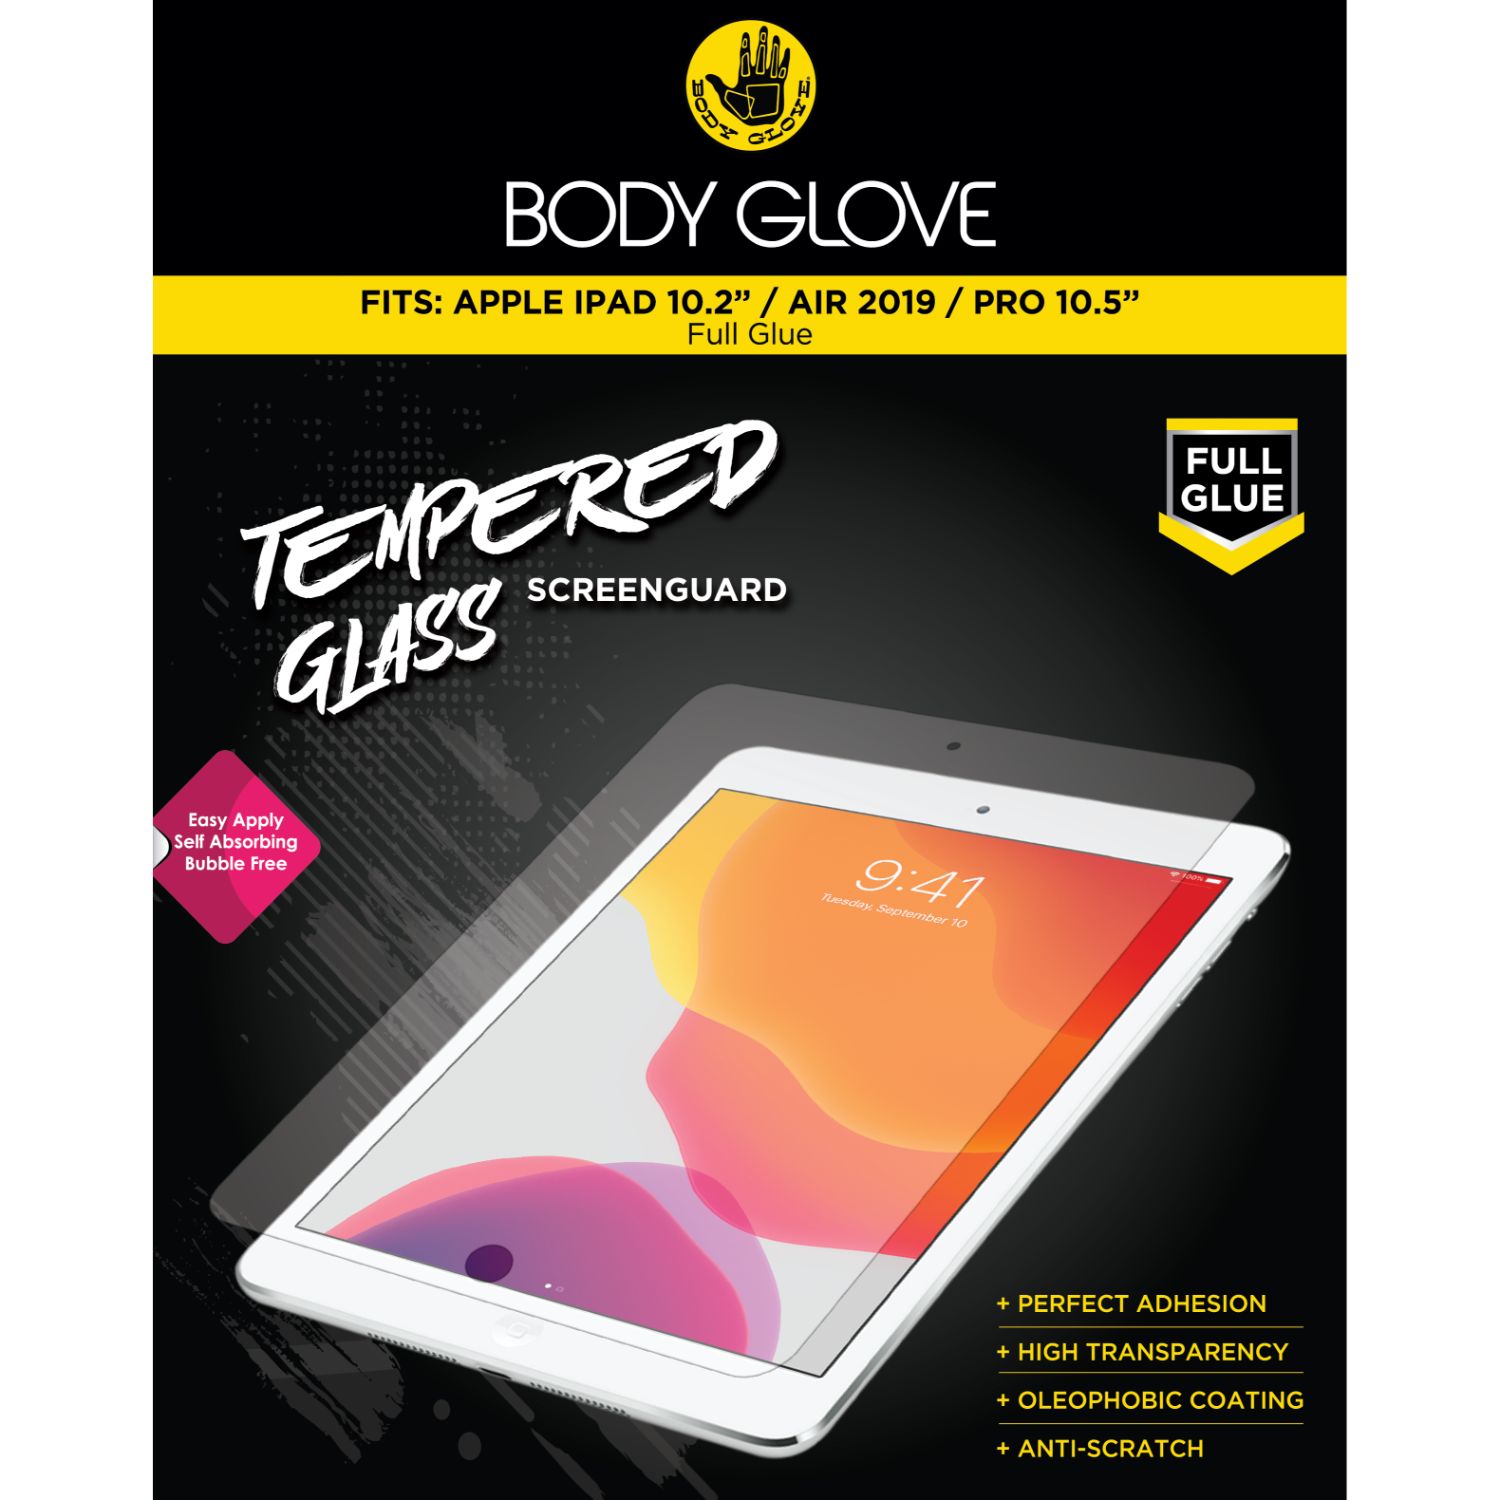 Body Glove iPad 10.2/Air 19/Pro 10.5 Tempered Glass